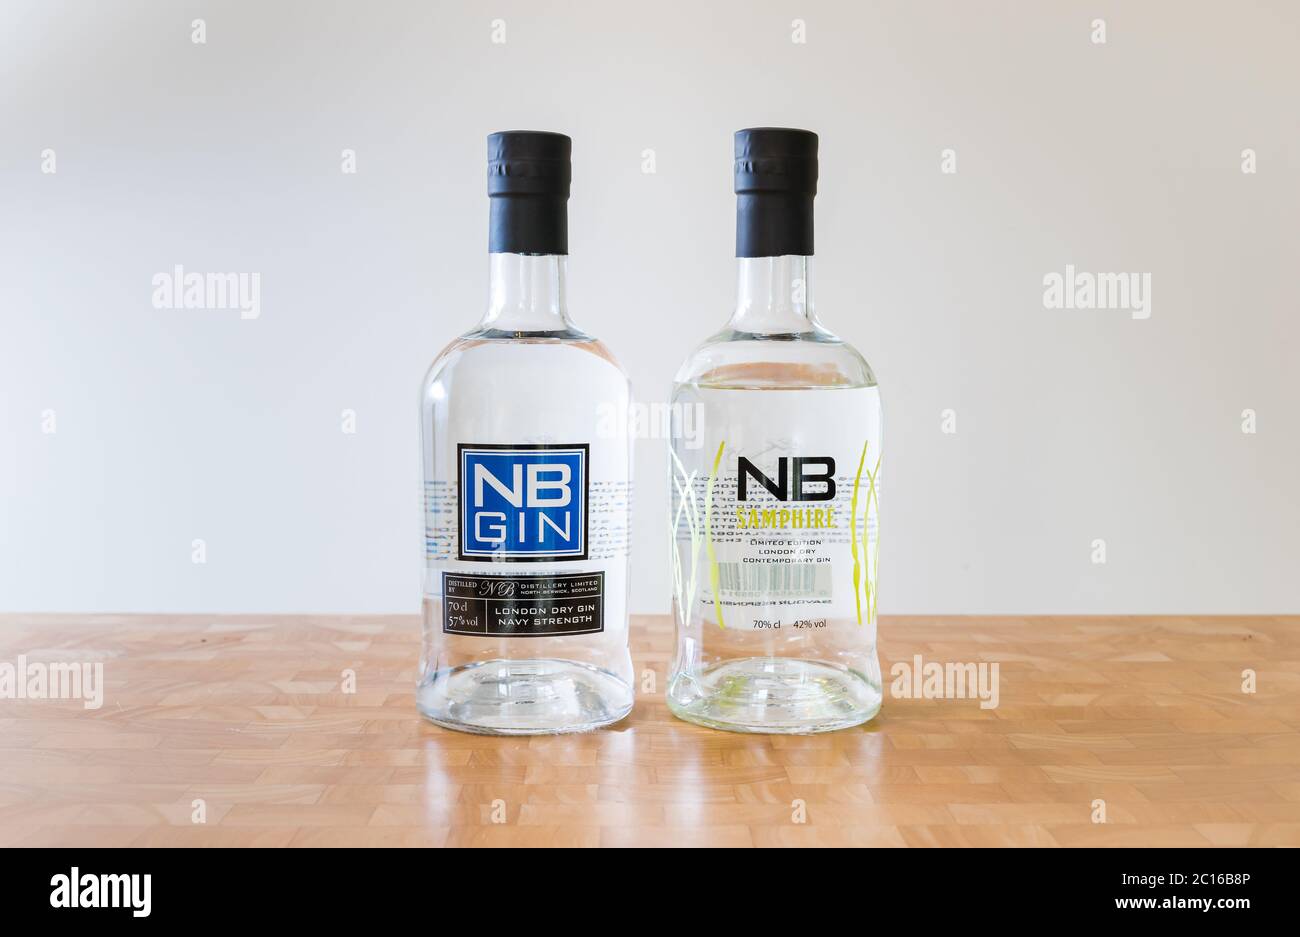 Bouteilles de marque North Berwick ou NB gin: Gin NB marine et gin NB  samhire Photo Stock - Alamy